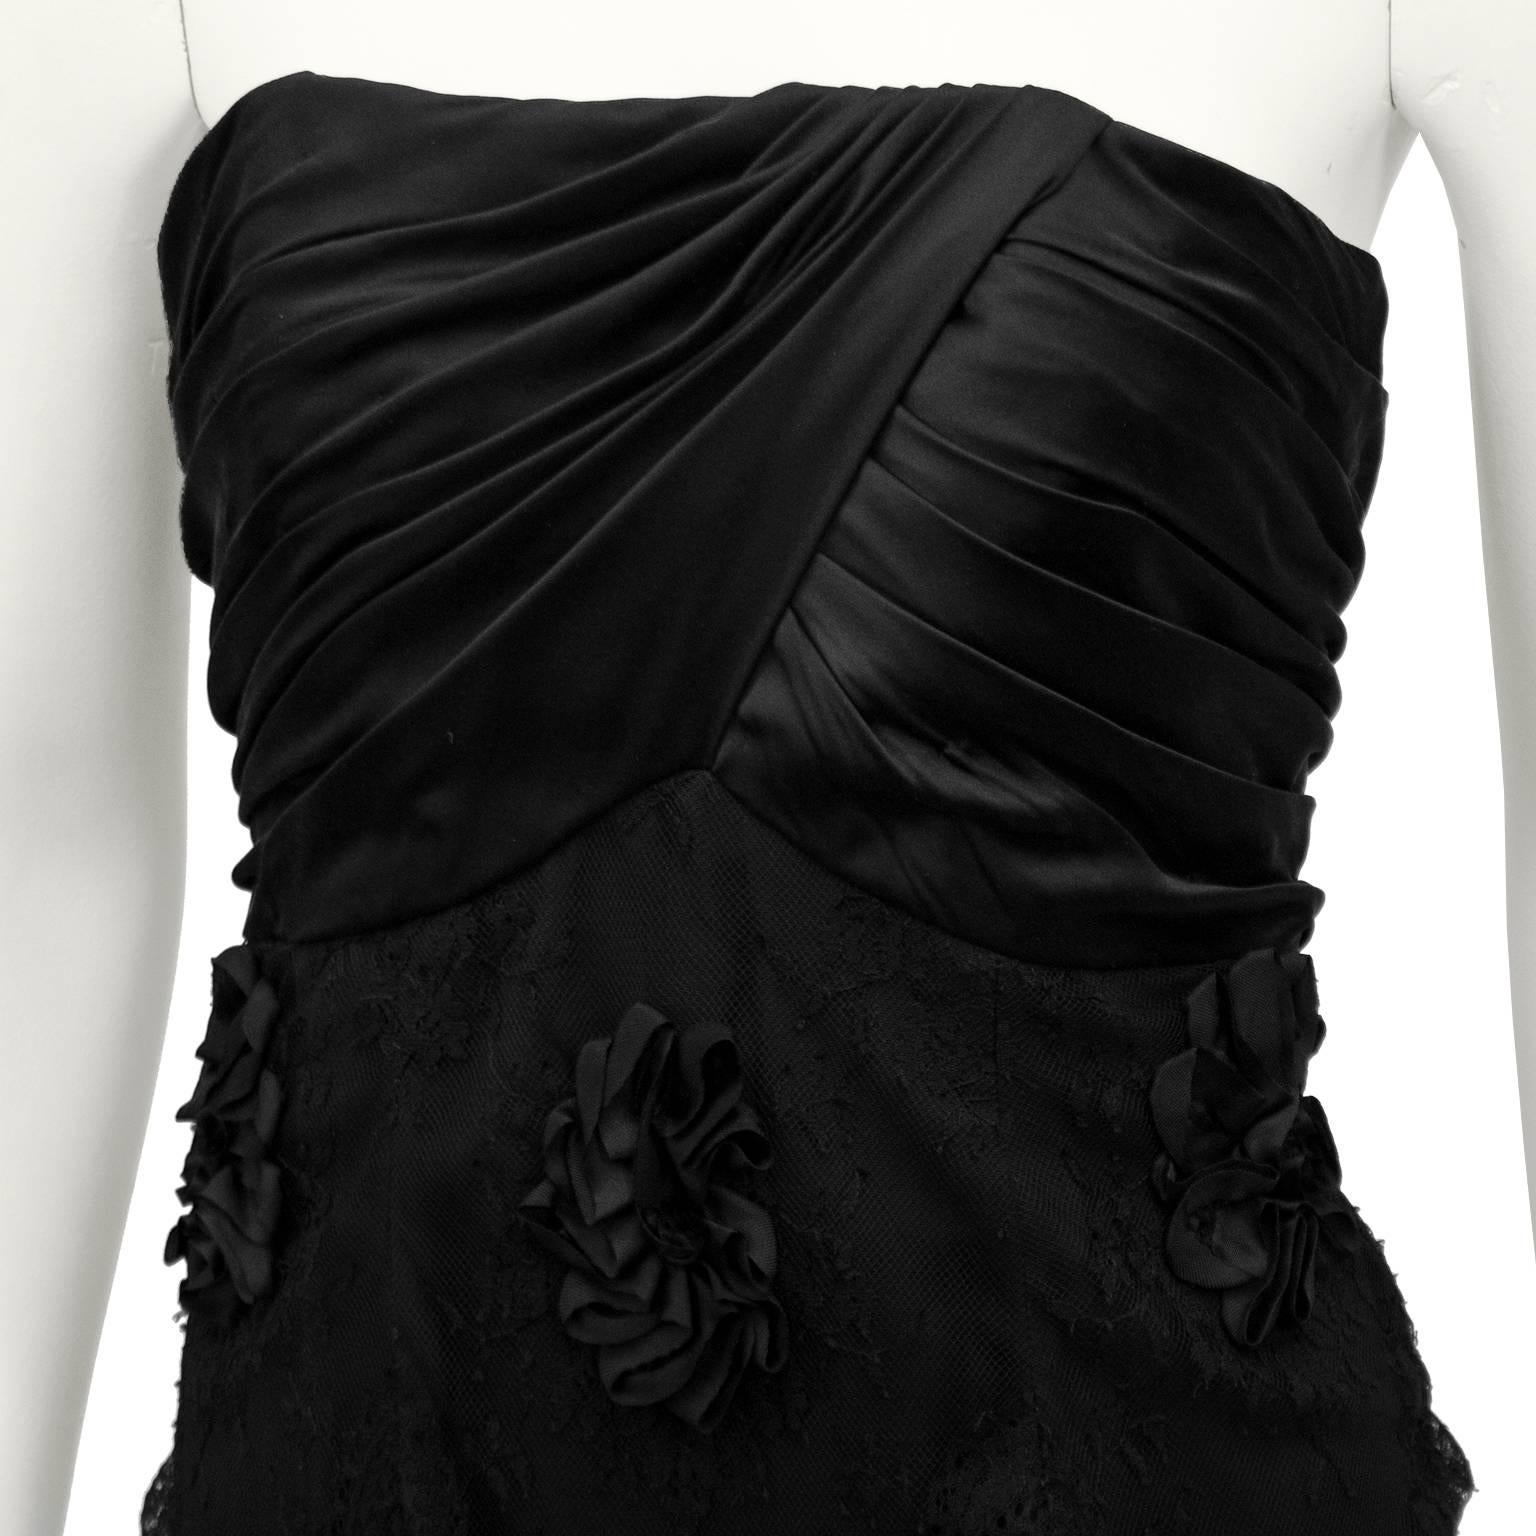 strapless black lace dress